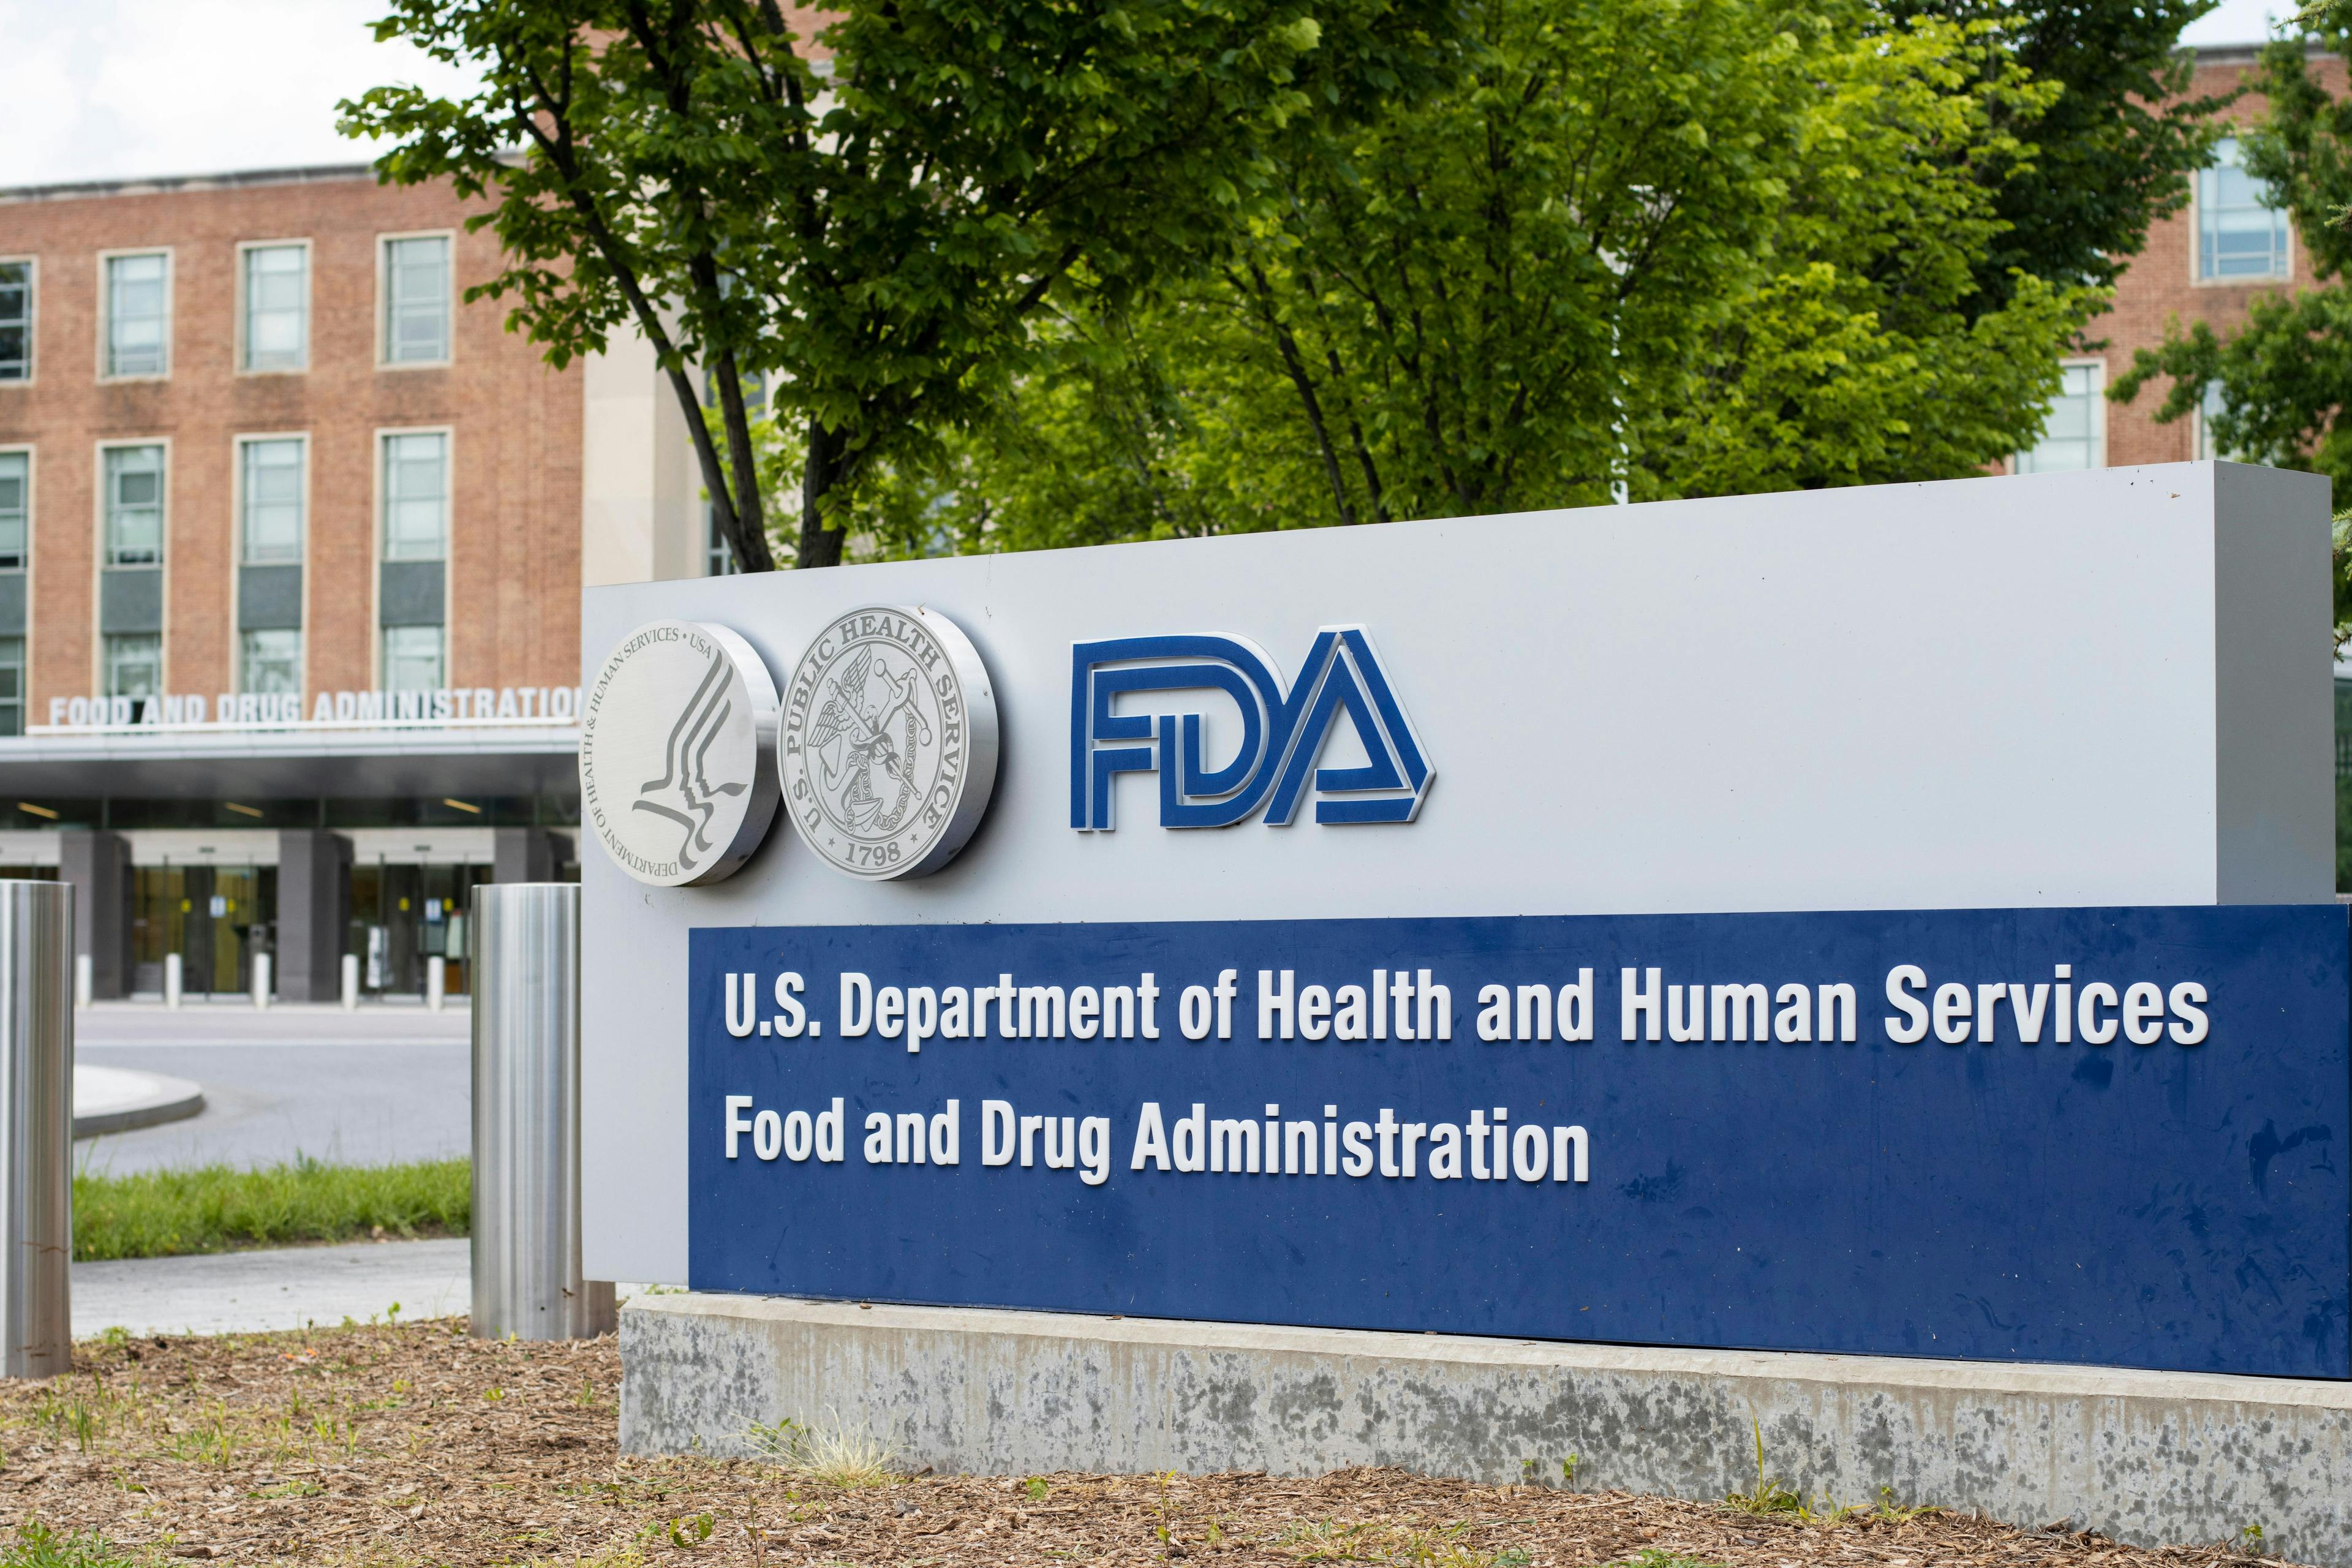 FDA building sign | Image credit: Tada Images – stock.adobe.com